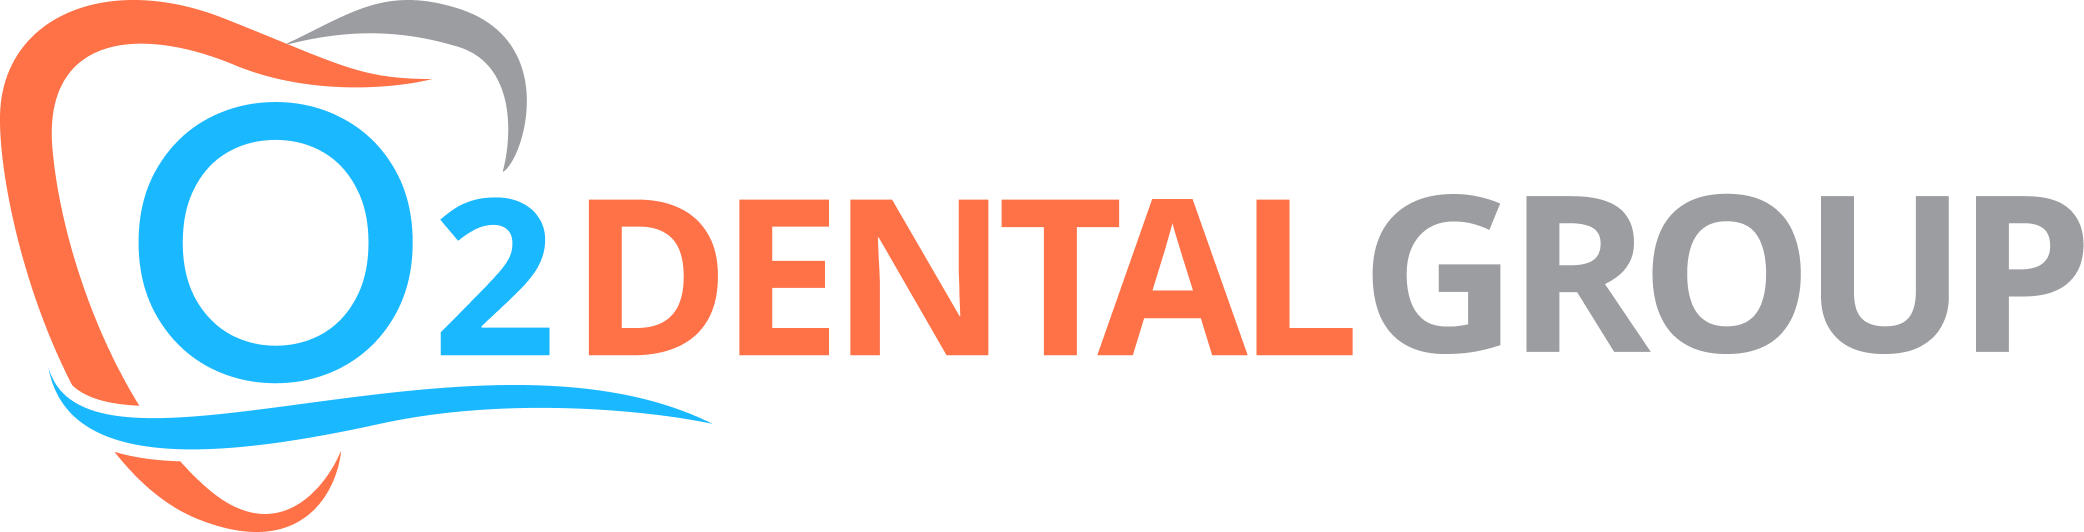 O2 Dental Group of Wilmington - logo